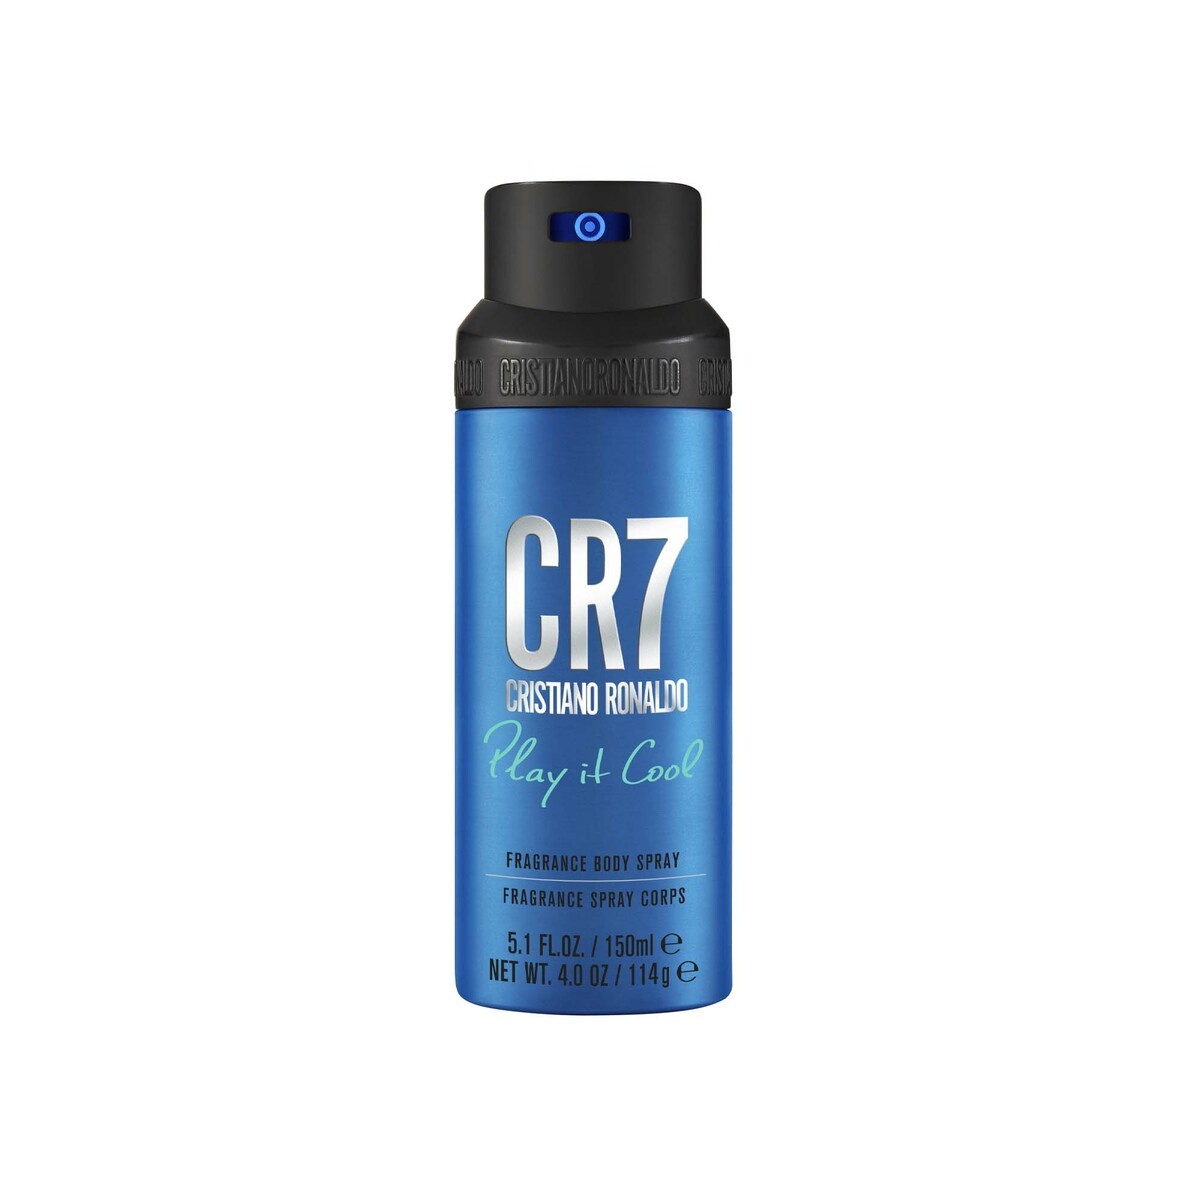 Cristiano Ronaldo CR7 Play It Cool Fragrance Body Spray for Men 150ml